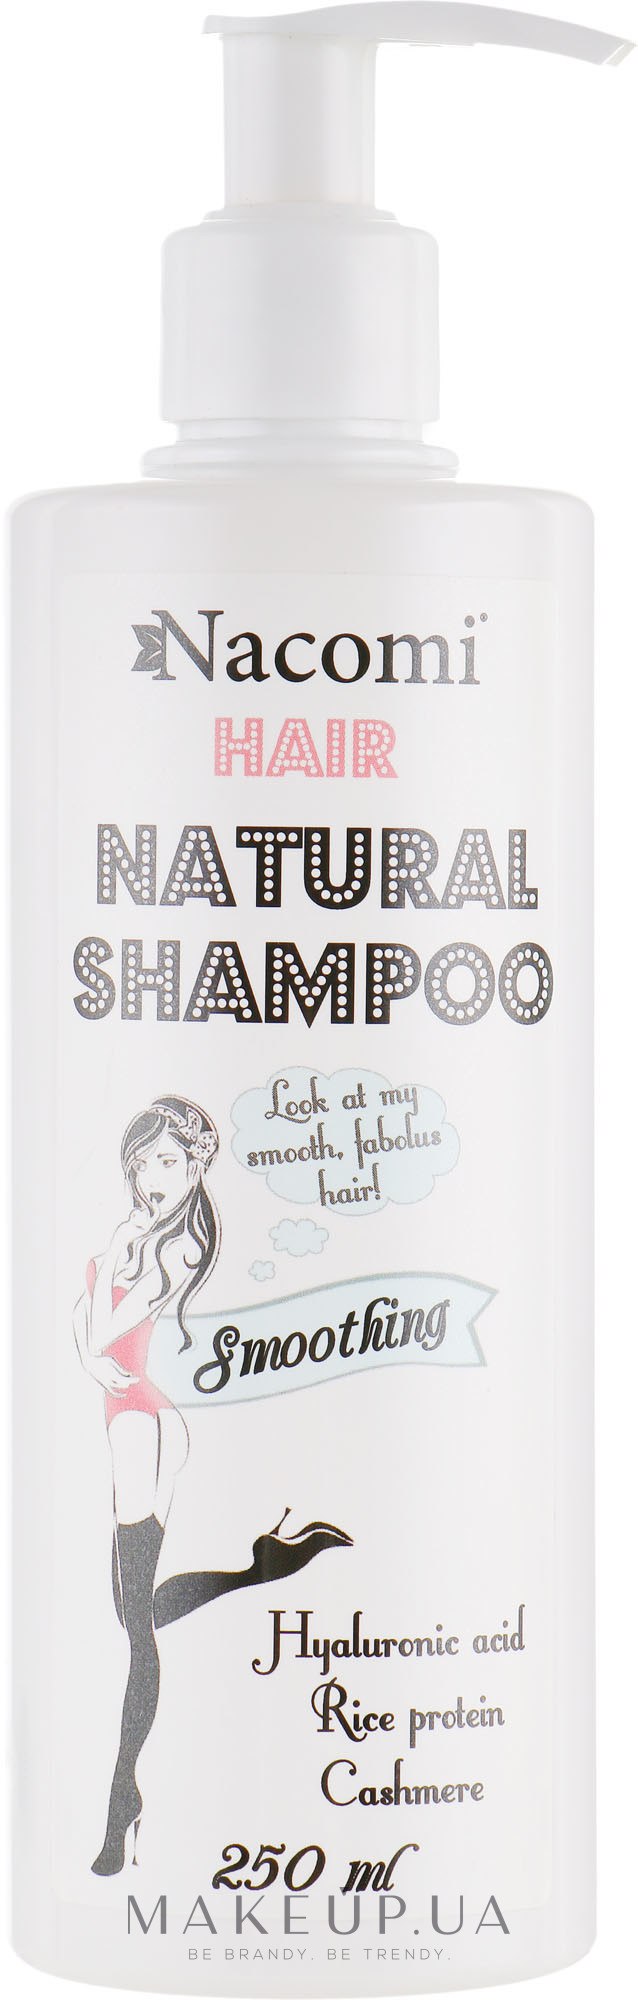 Увлажняющий и сглаживающий шампунь для волос - Nacomi Hair Natural Smoothing Shampoo — фото 250ml